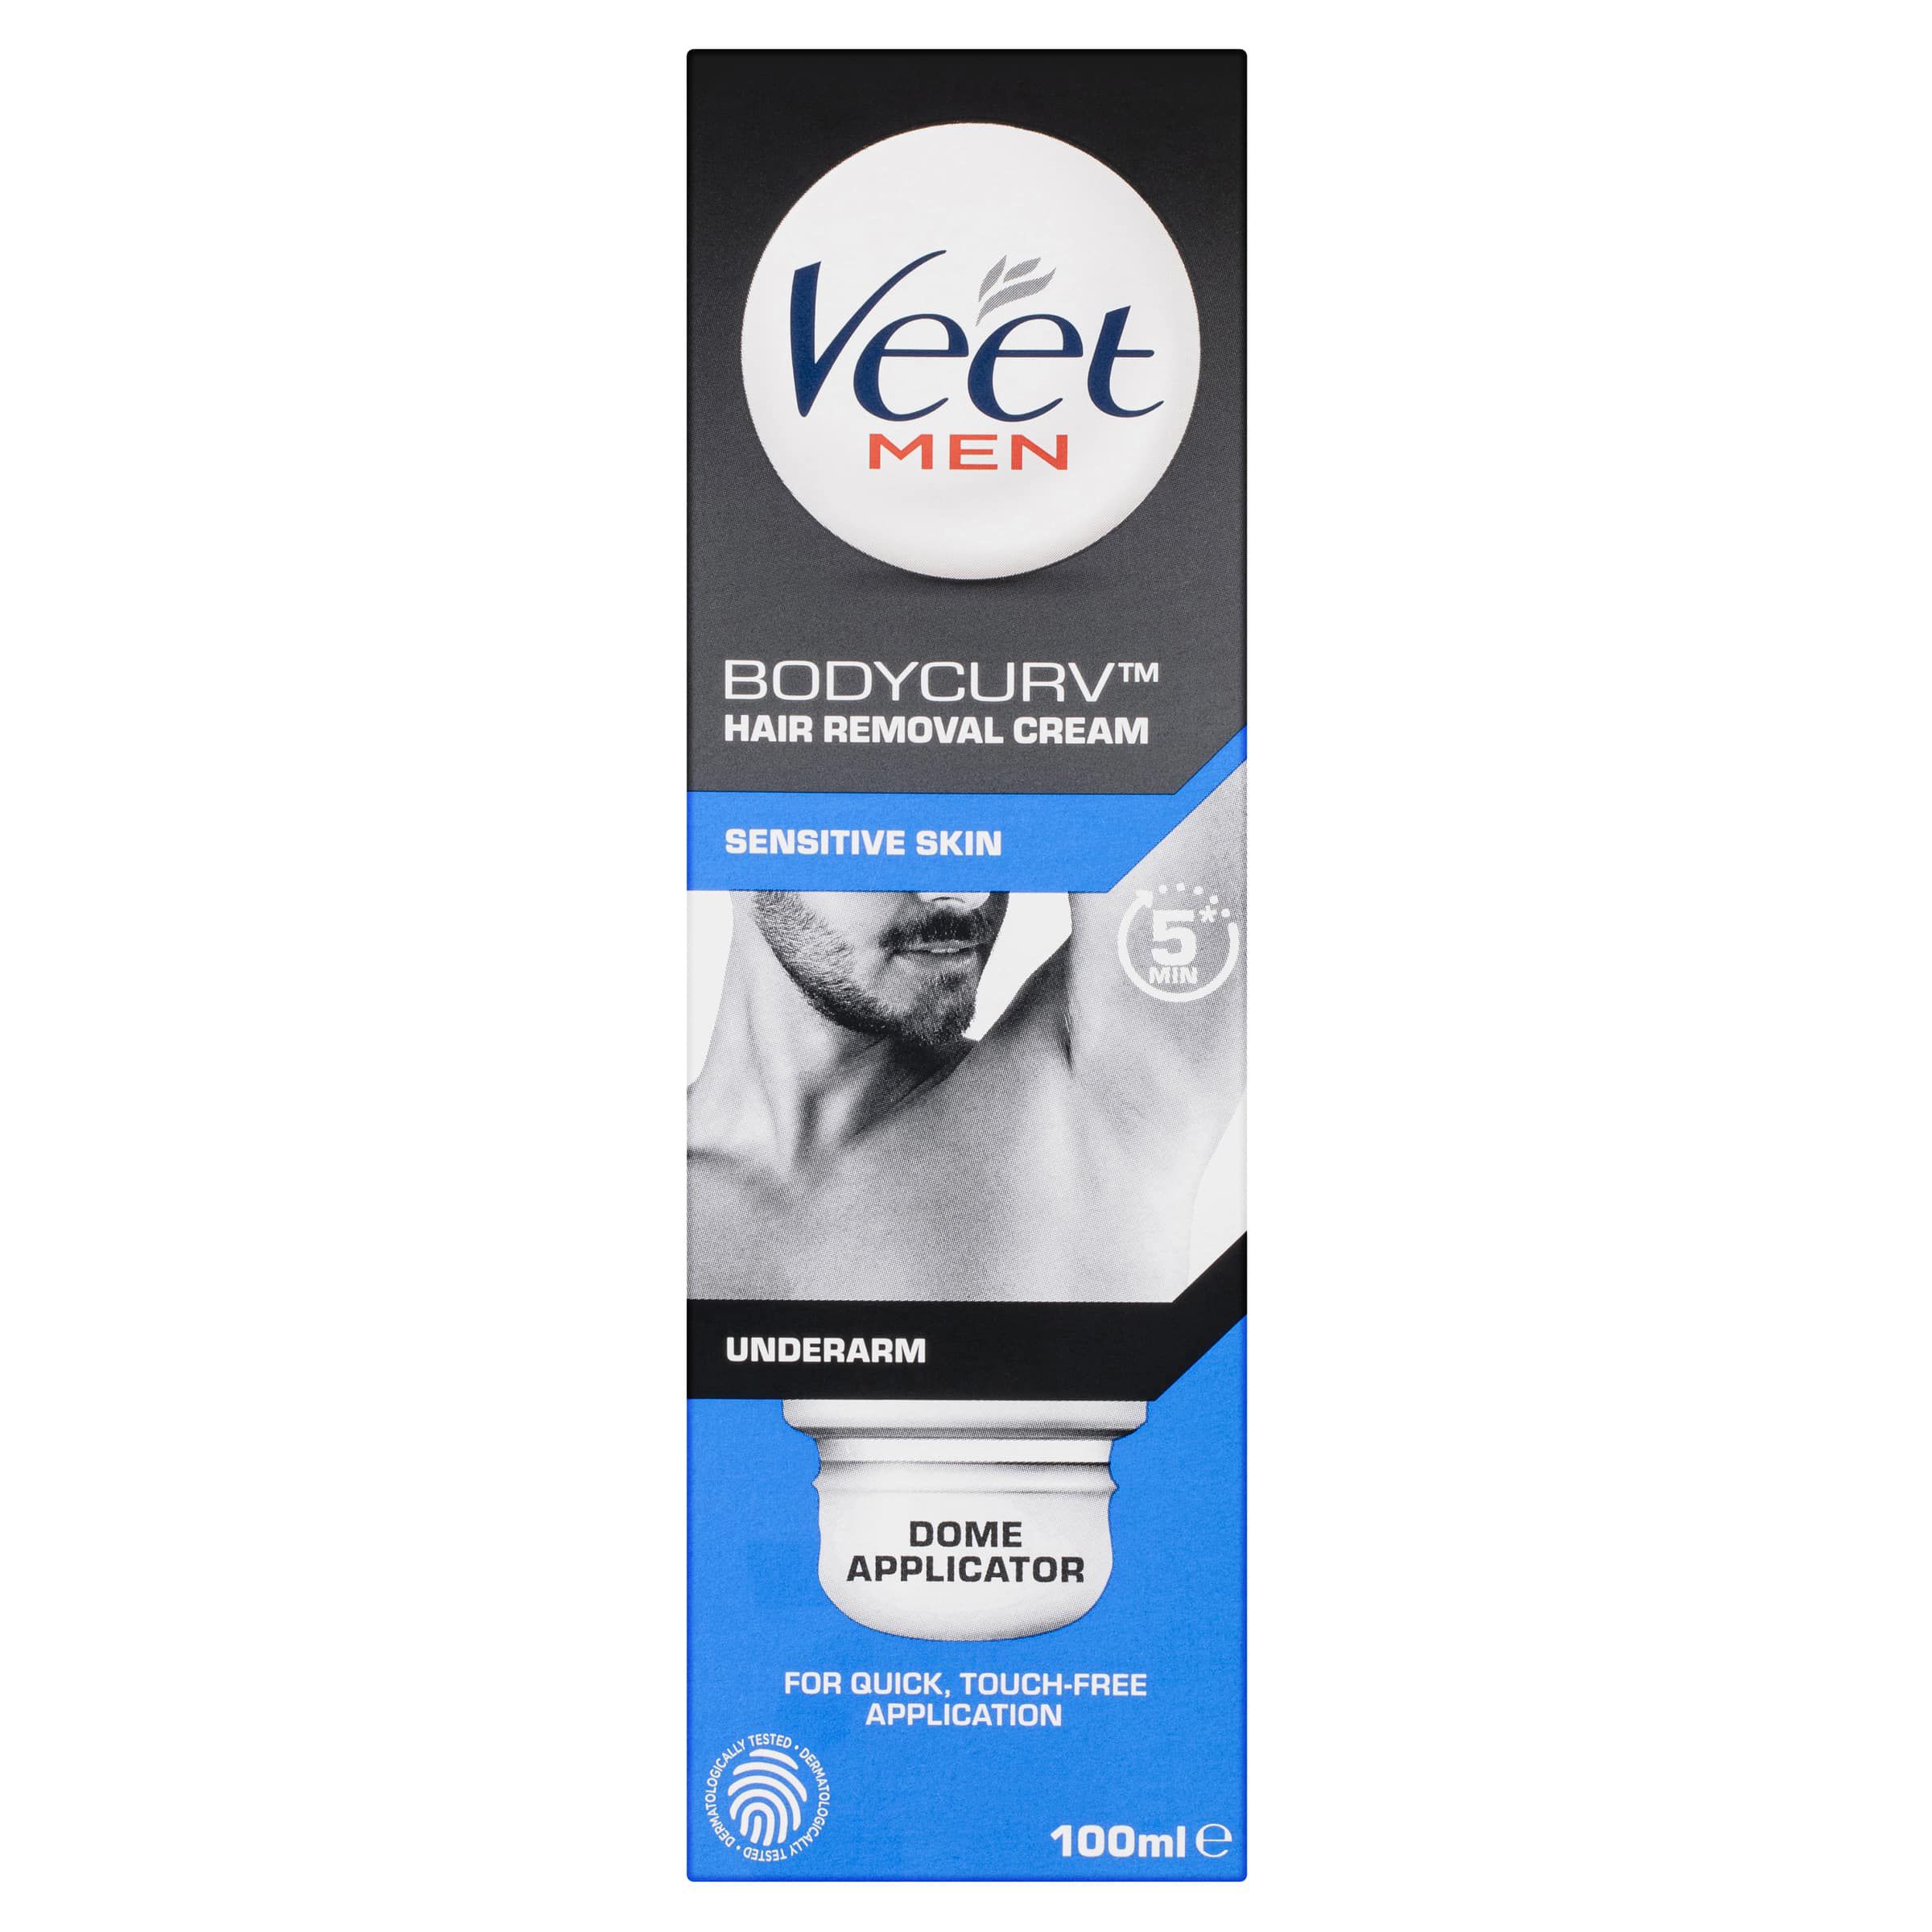 Veet Men Body Curve Cream Sensitive Skin 100ml | Veet® New Zealand